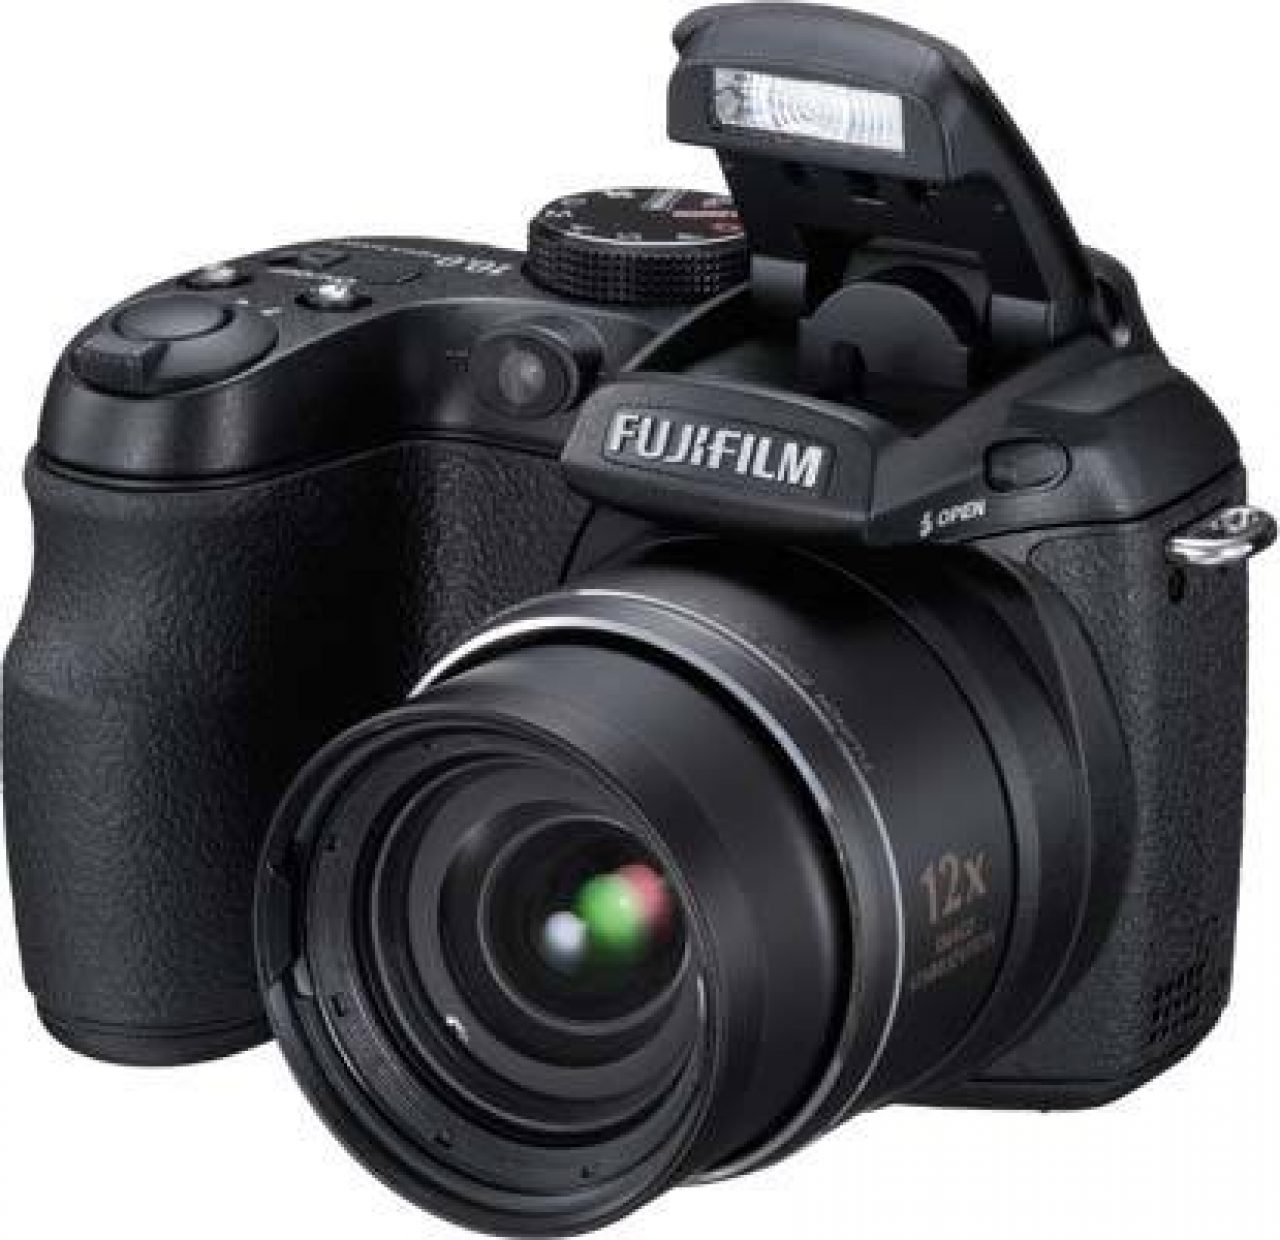 Fujifilm FinePix S1500 Review Photography Blog